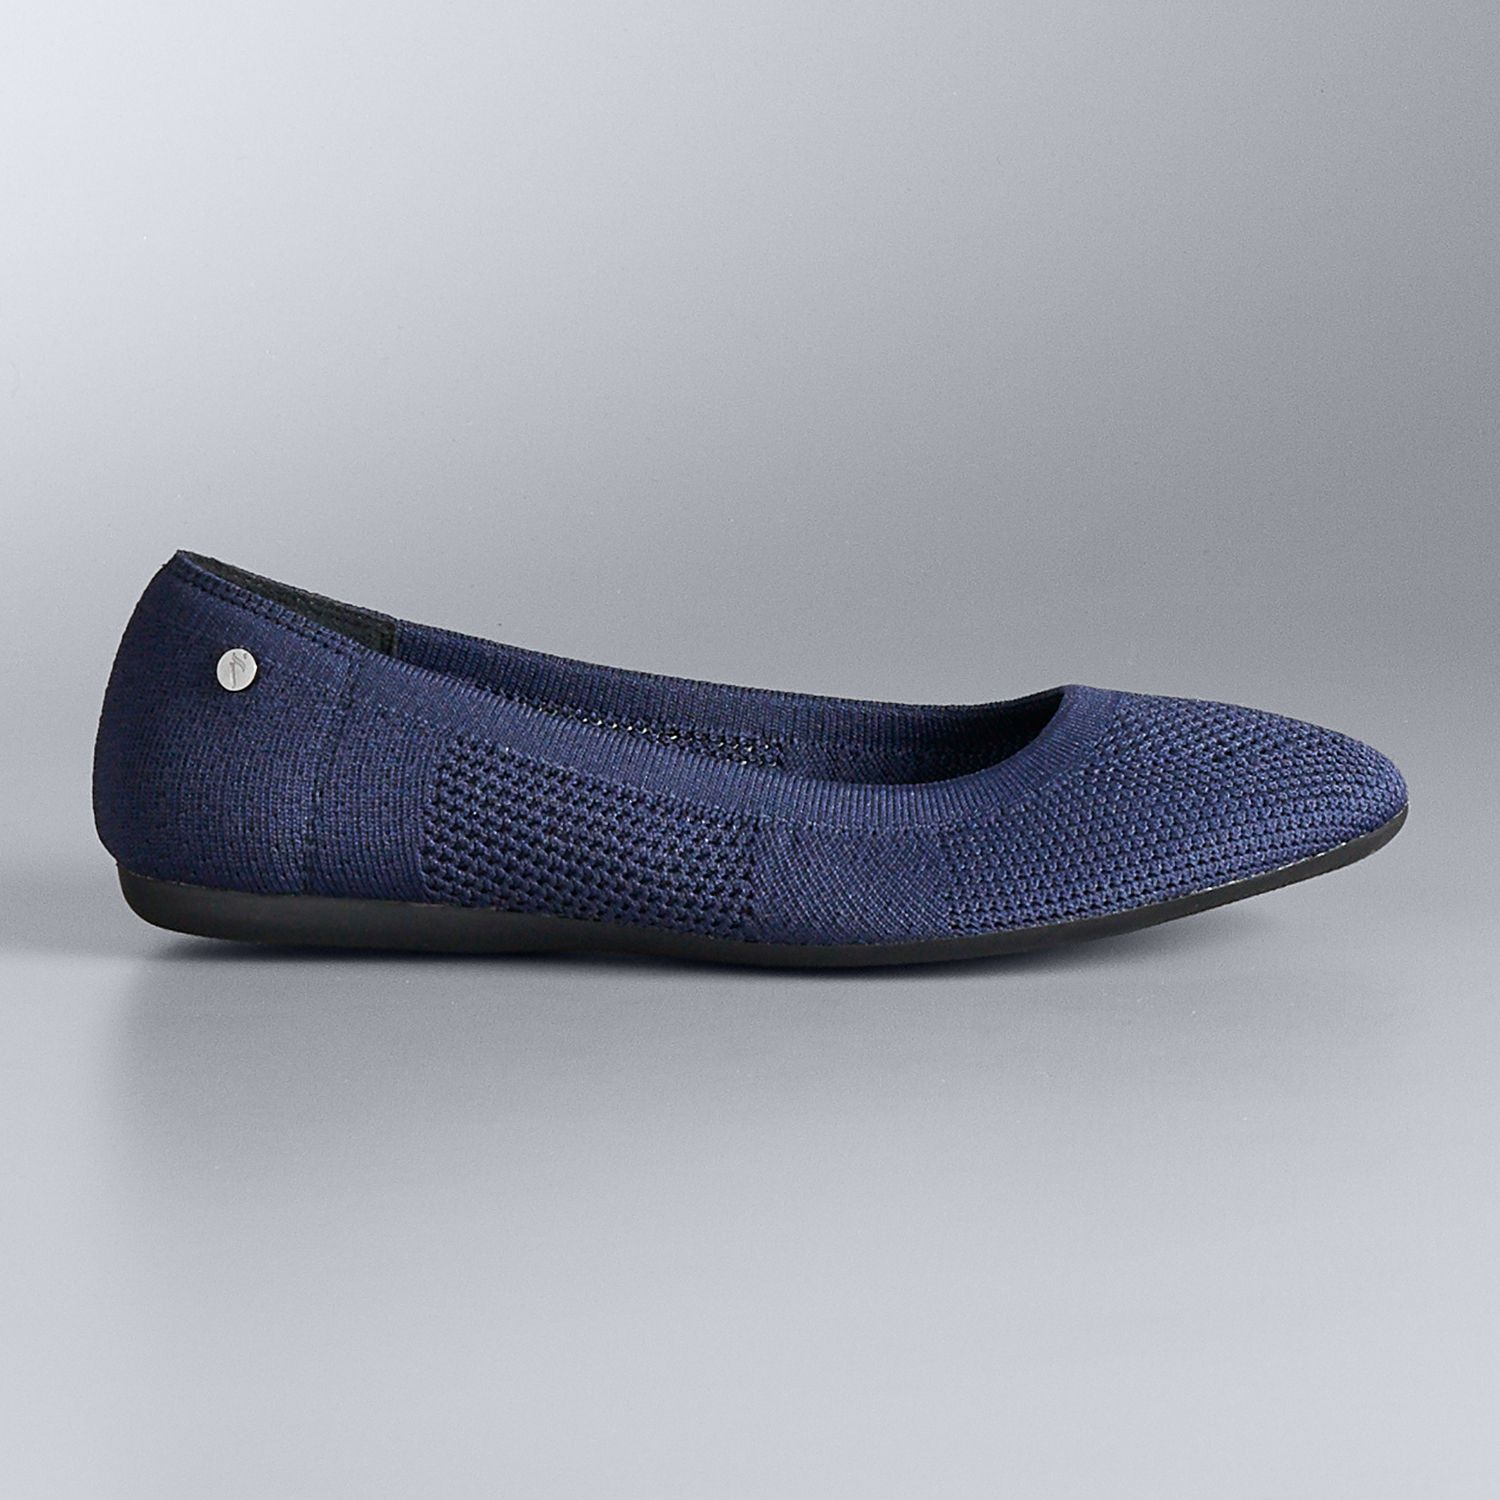 kohls navy blue shoes